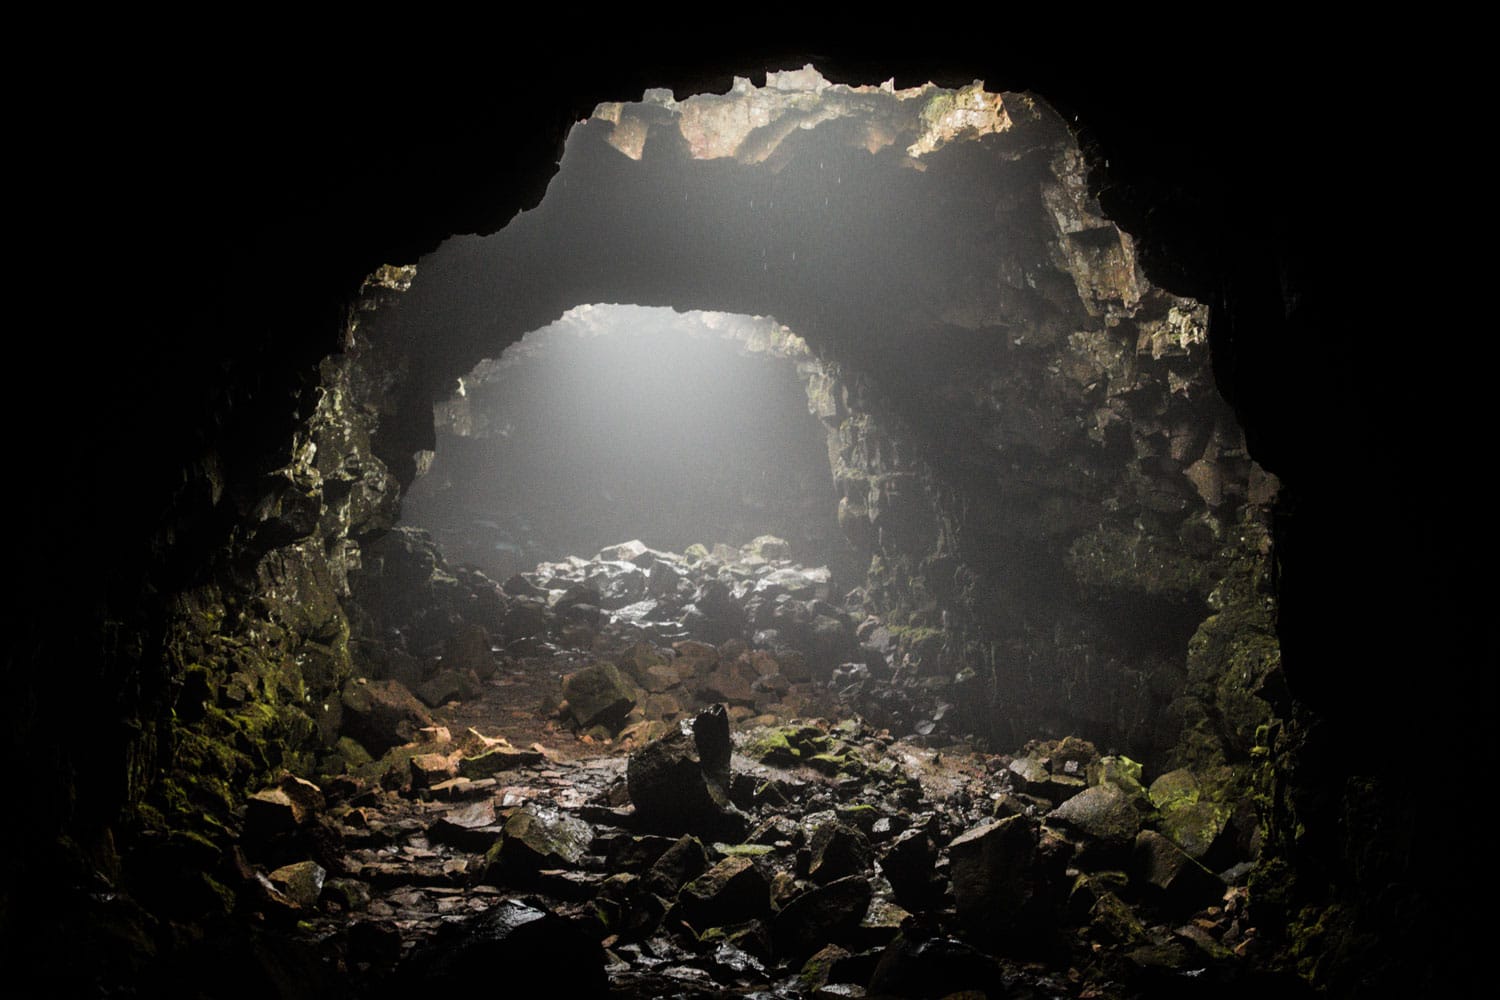 Raufarholshellir lava cave, South Iceland